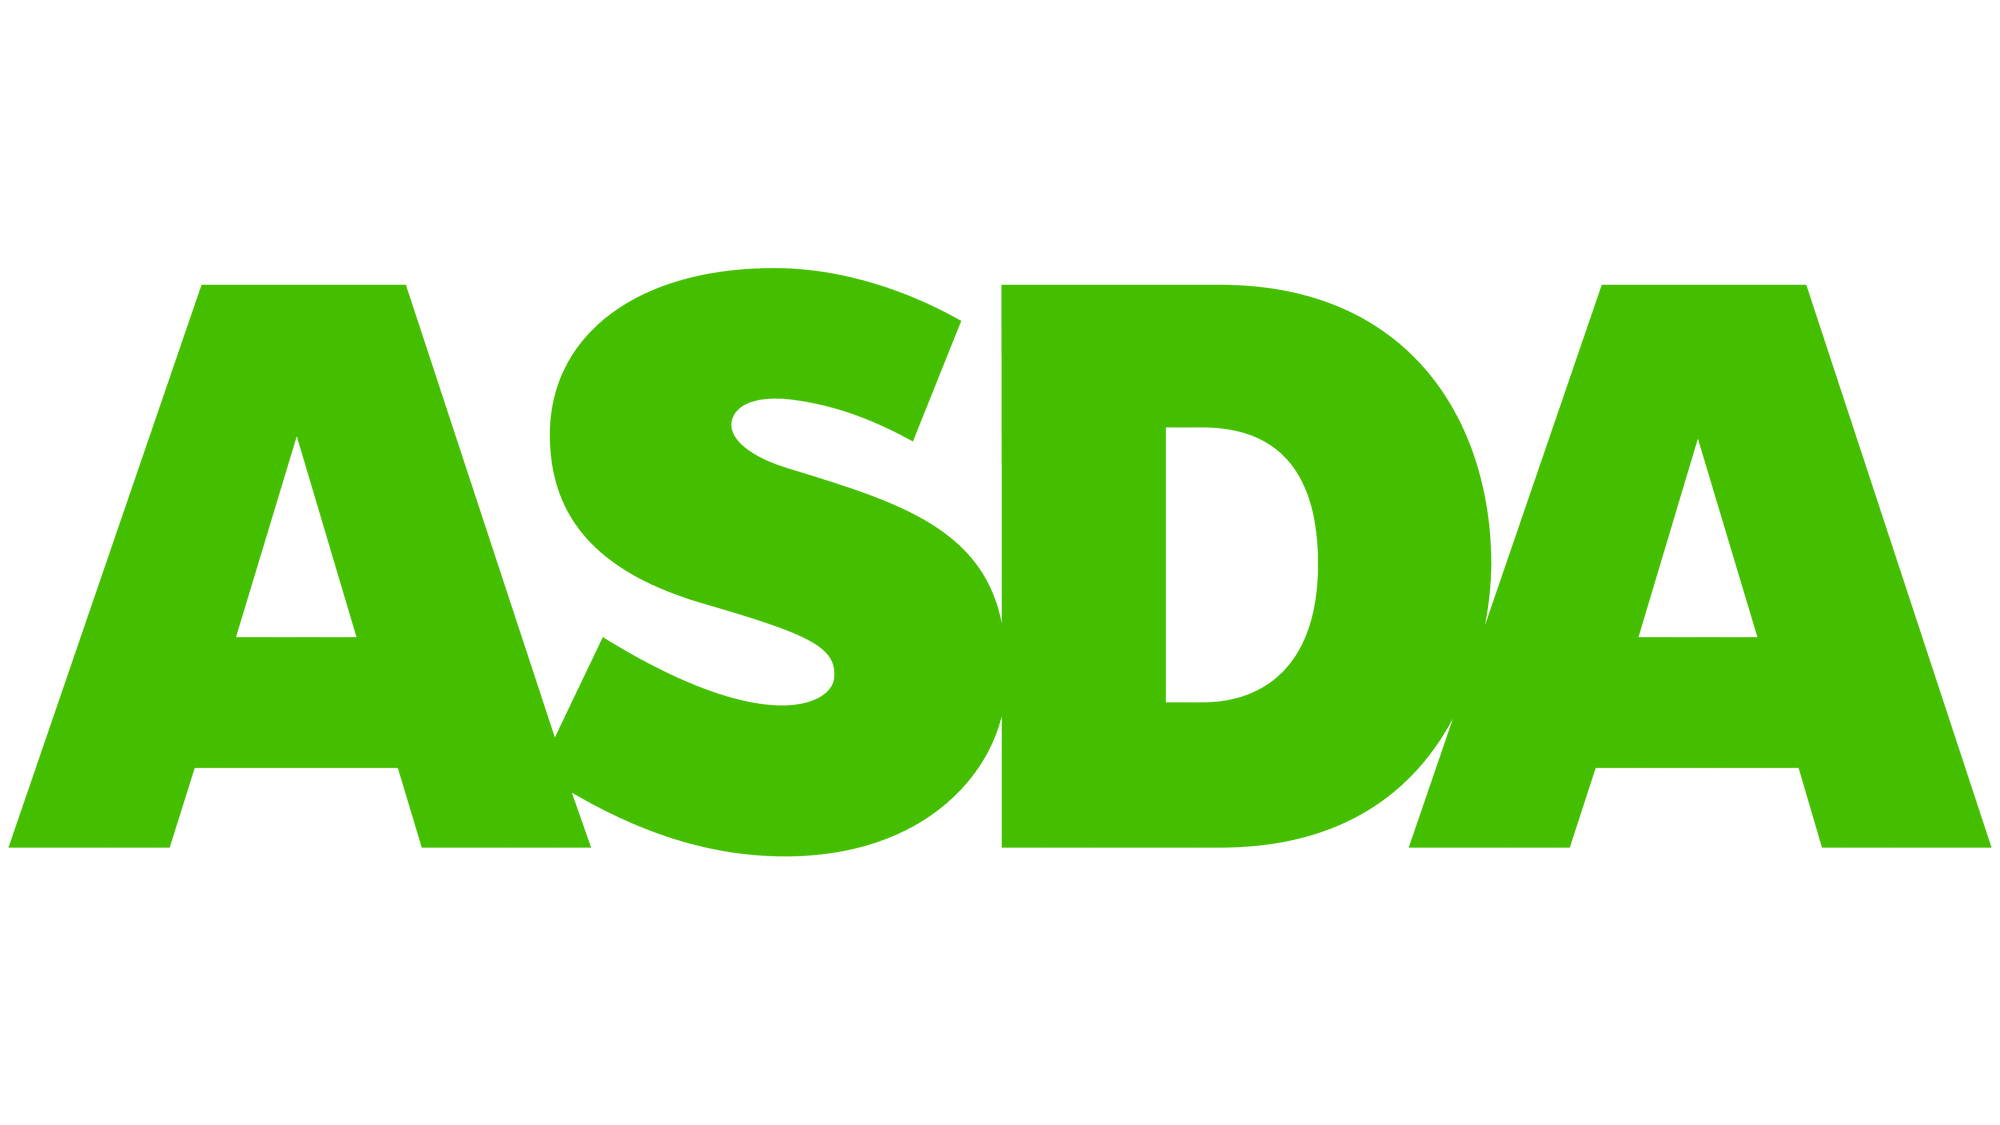 asda shopping link via logo image